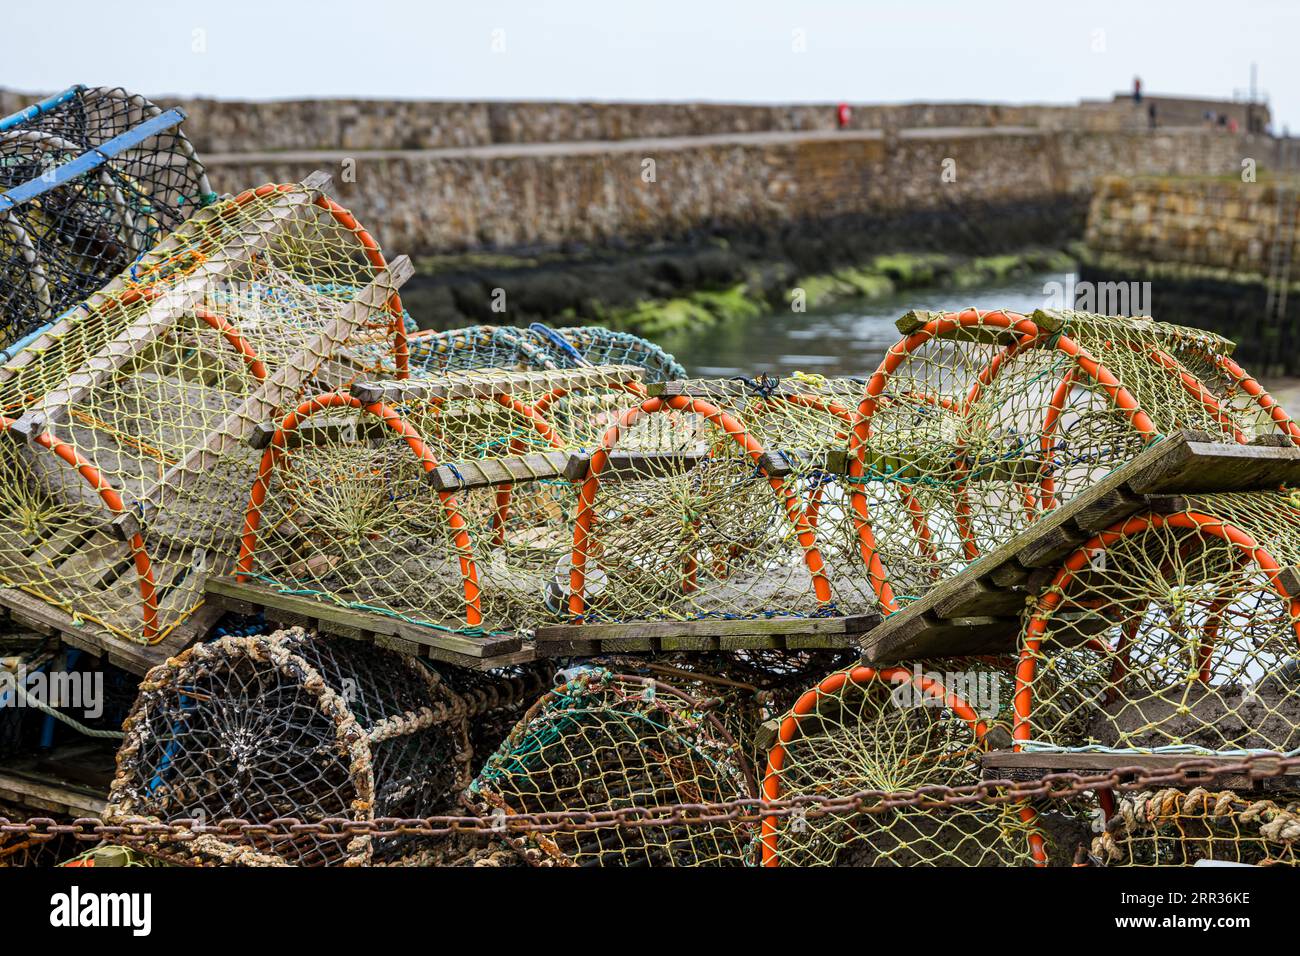 Lobster pots, creels or cages on harbourside, St Andrews, Fife, Scotland, UK Stock Photo